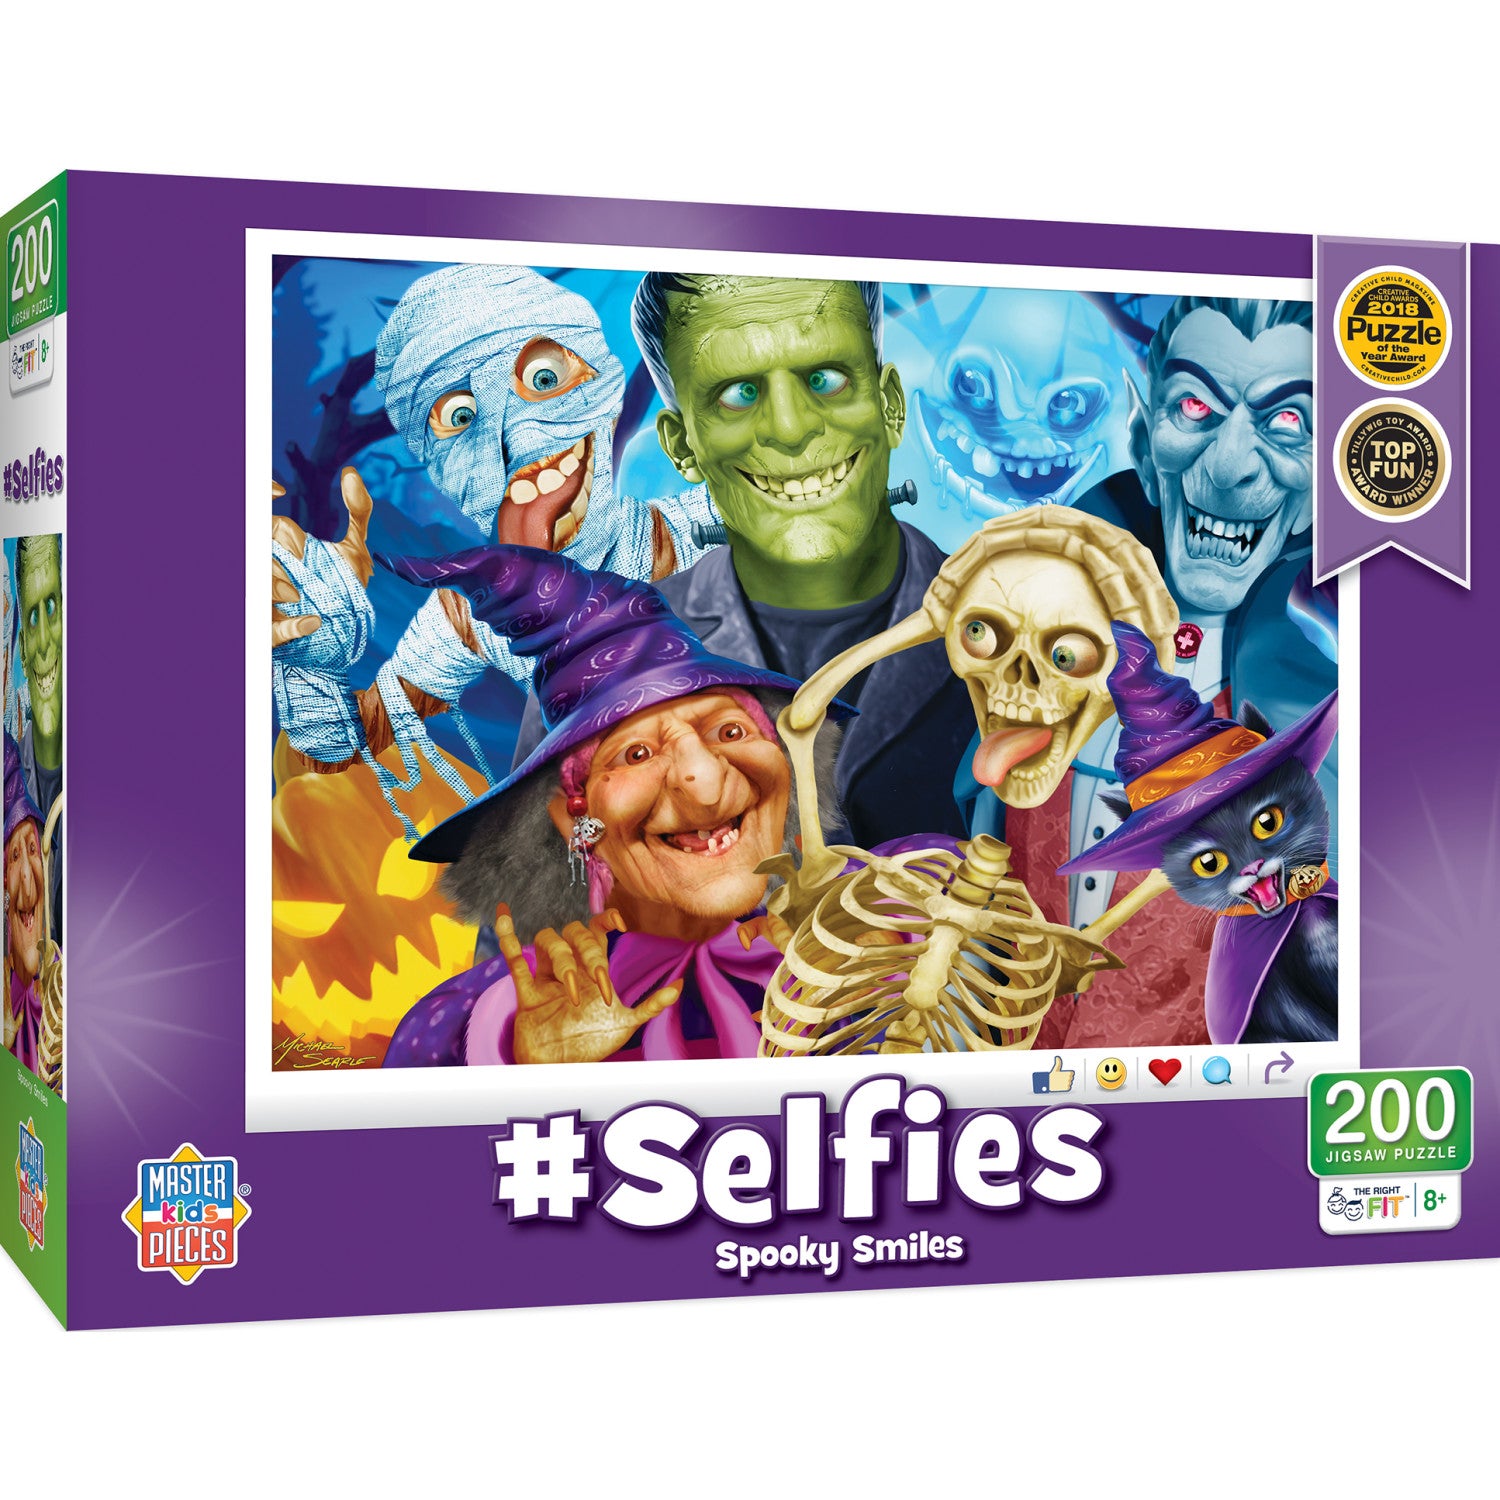 Selfies - Spooky Smiles 200 Piece Puzzle